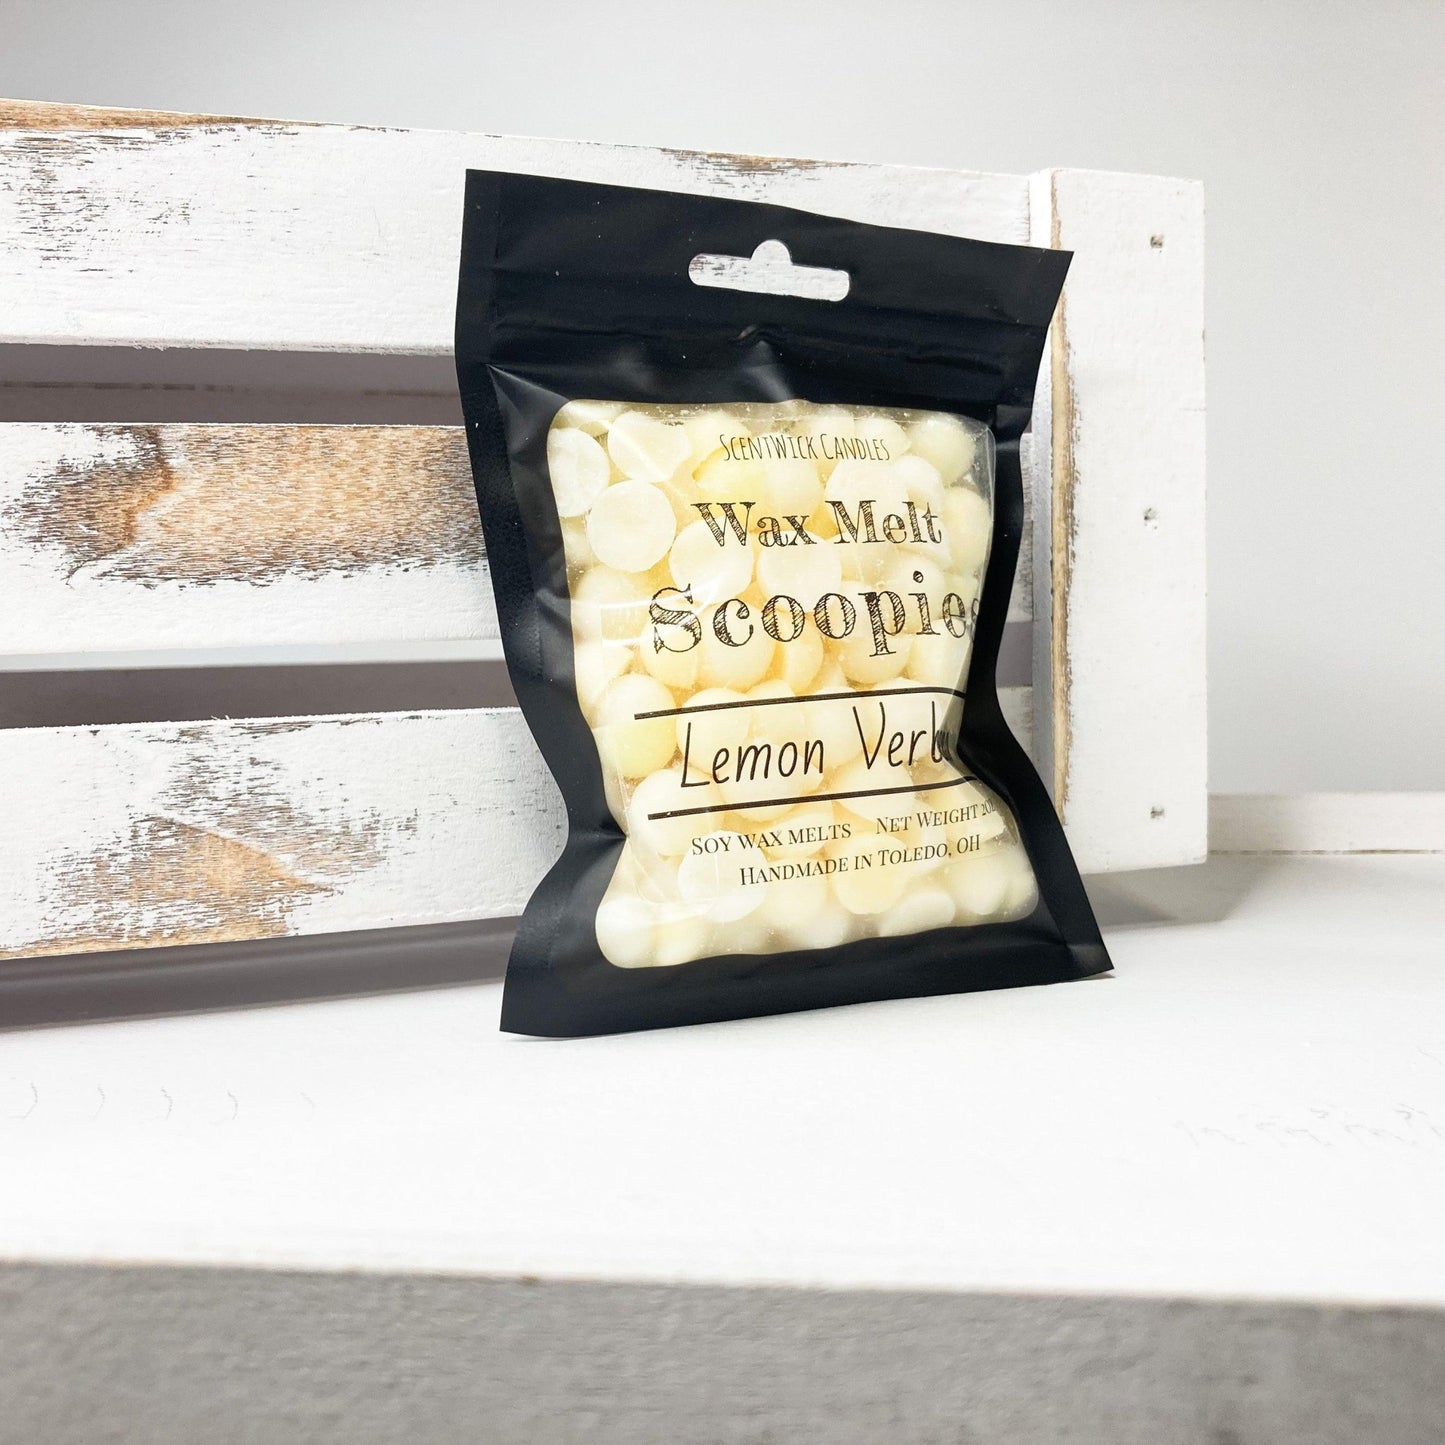 Lemon Verbena Wax Melt Scoopies pack - ScentWick Candles